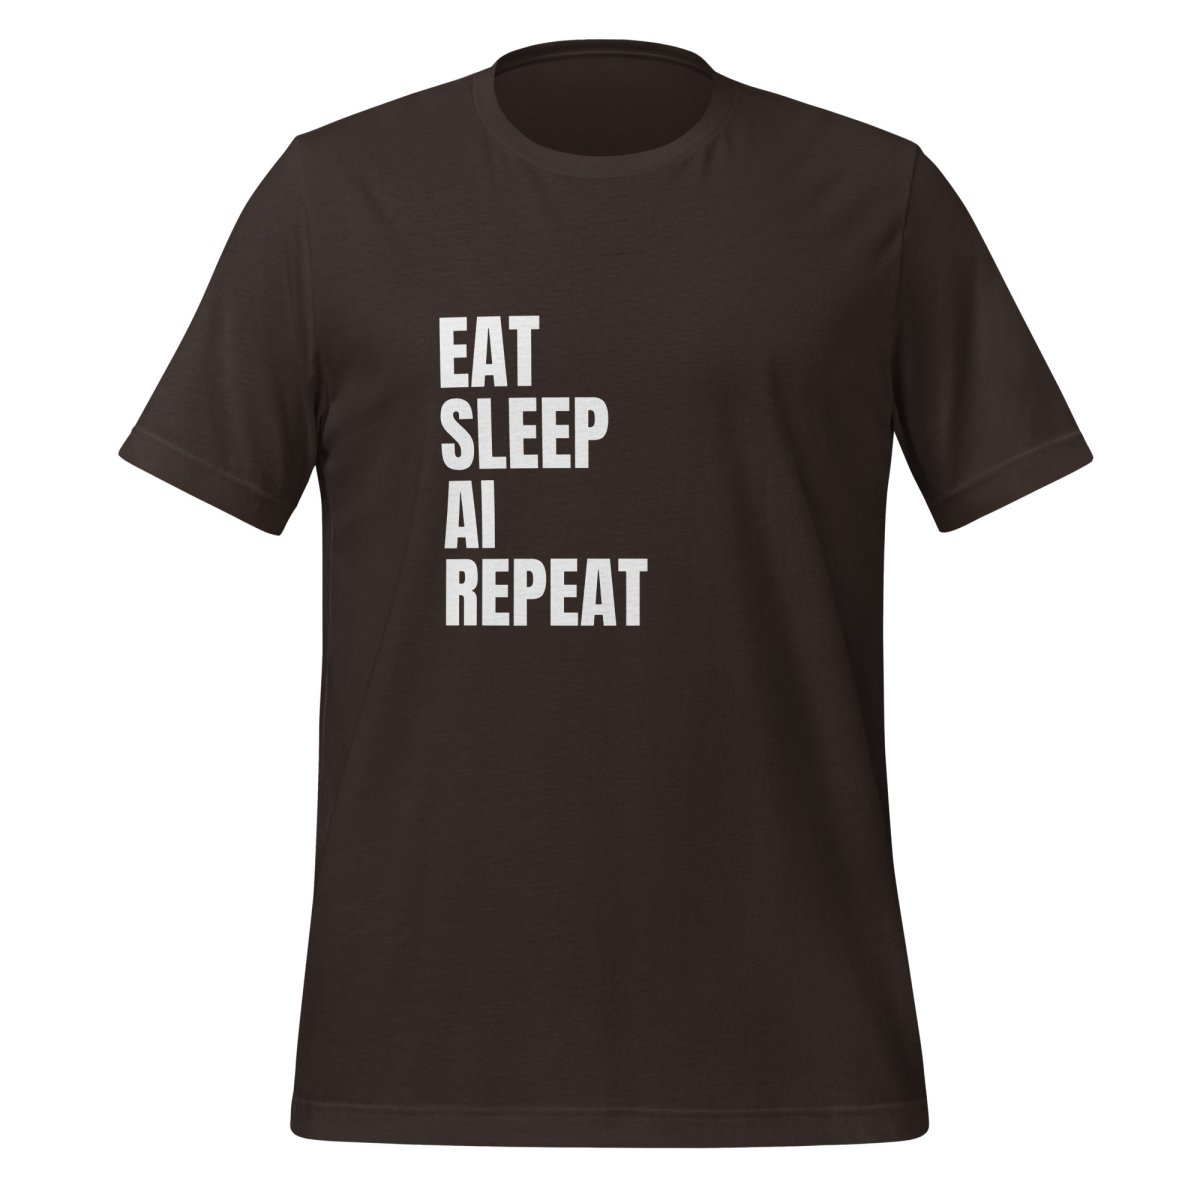 EAT SLEEP AI REPEAT T - Shirt 1 (unisex) - Brown - AI Store